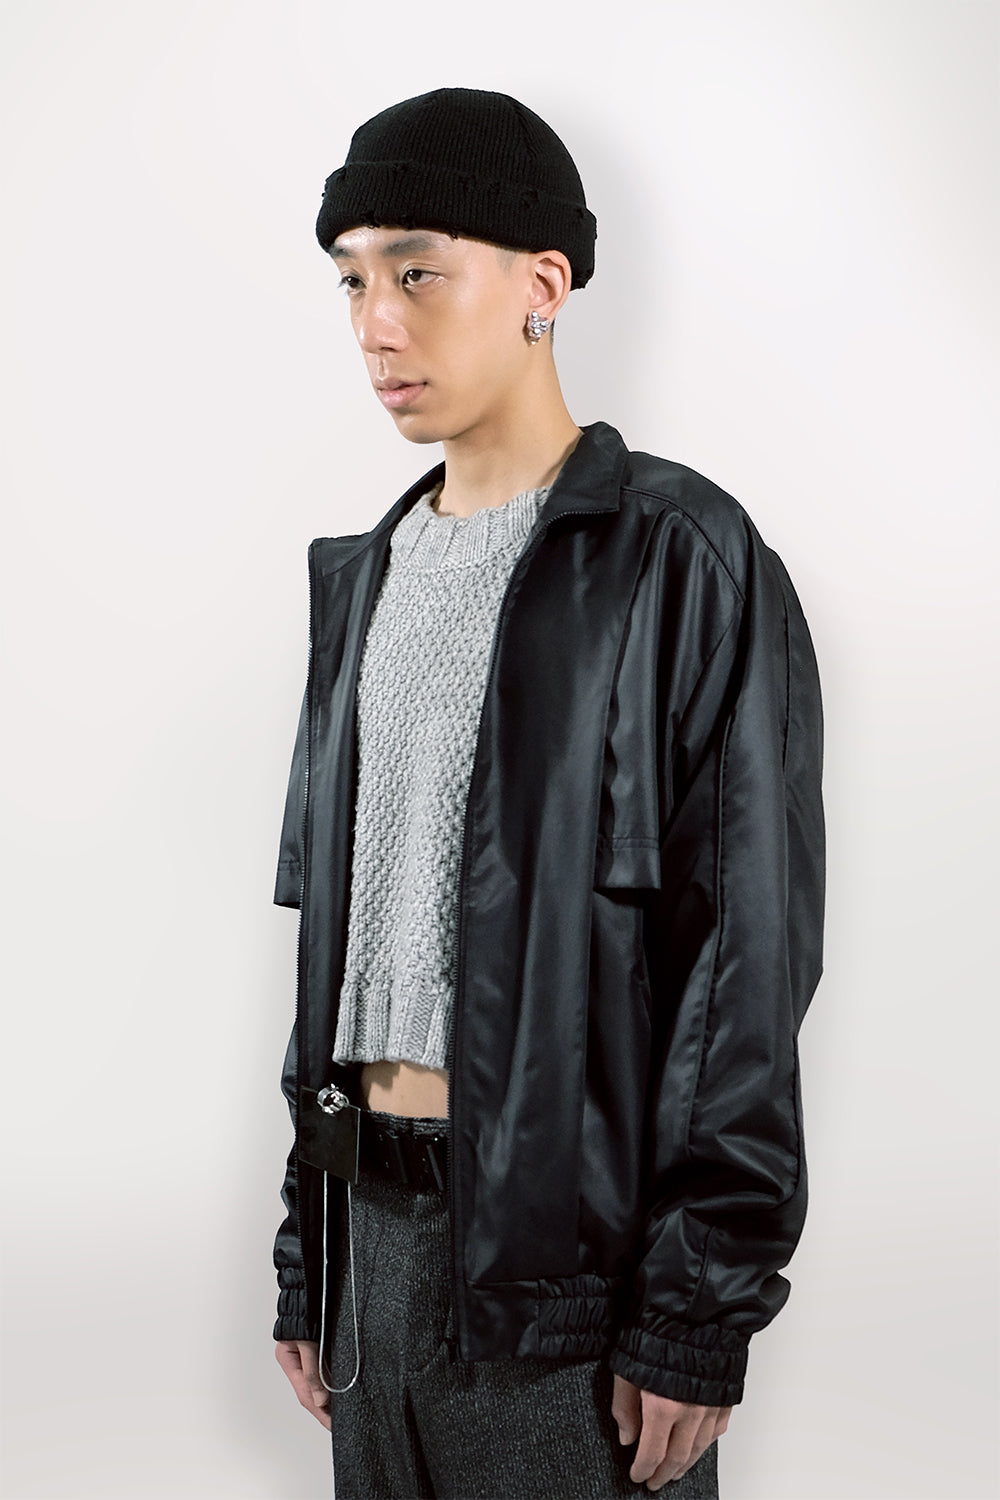 SEANNUNG - MEN - Cross windbreaker jacket 十字襠風衣夾克